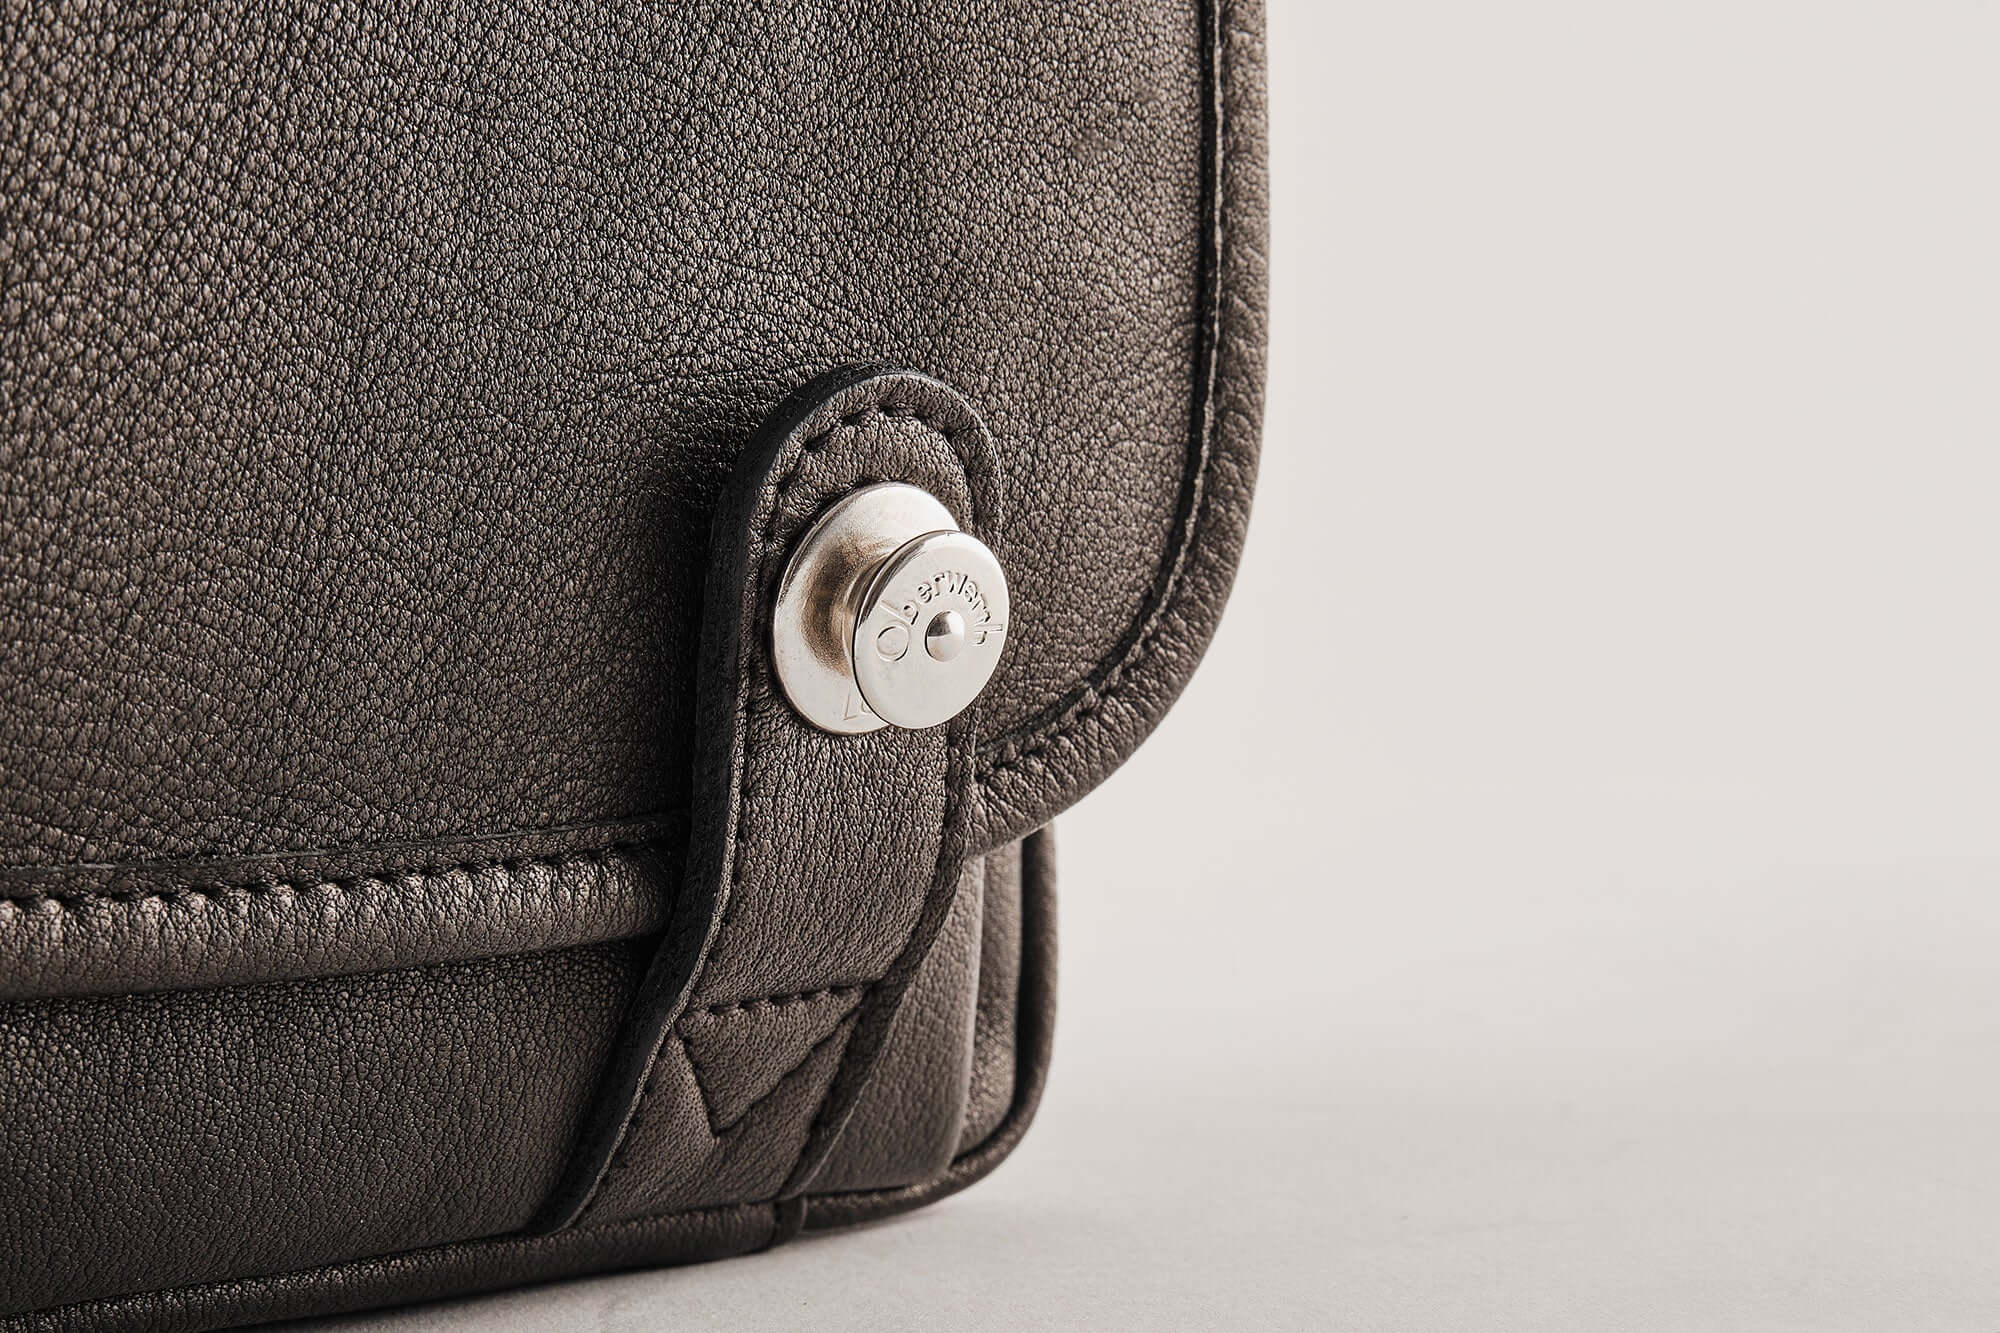 The Q Bag Rhubarb Edition - Leica Q3 Bag